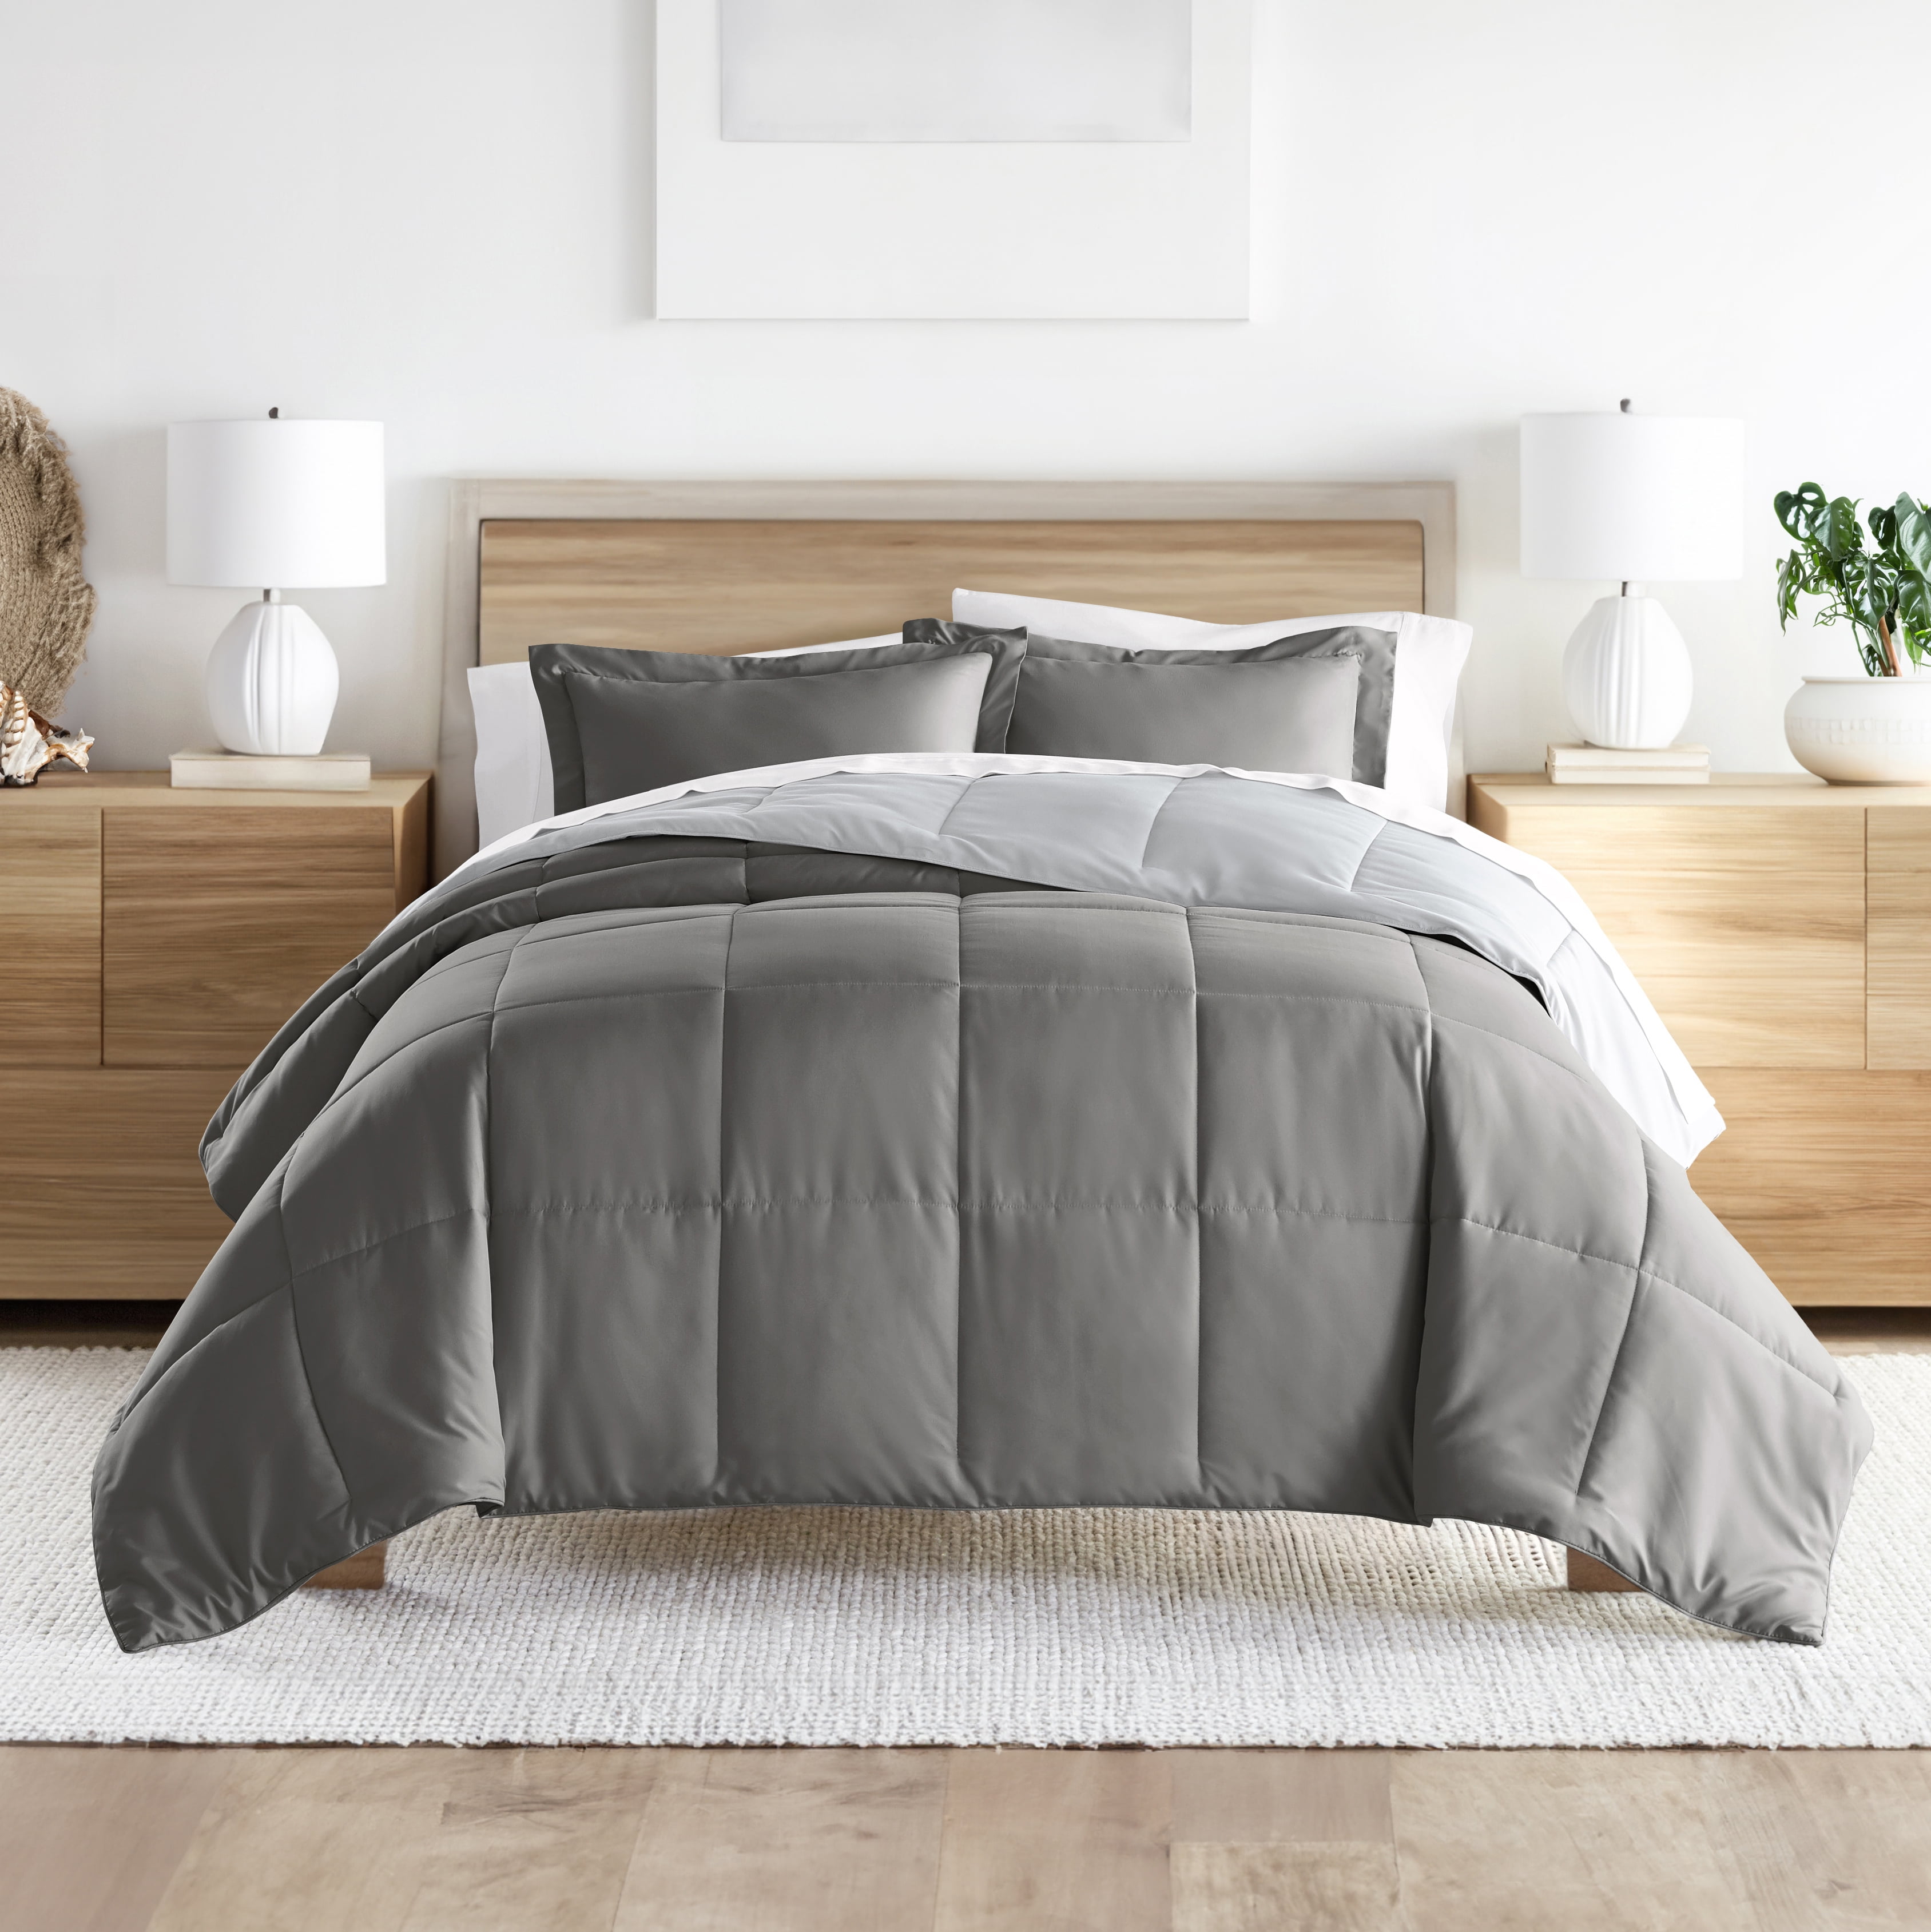 Gray Damask Tanner Reversible Comforter Set (Queen) - Marble Hill